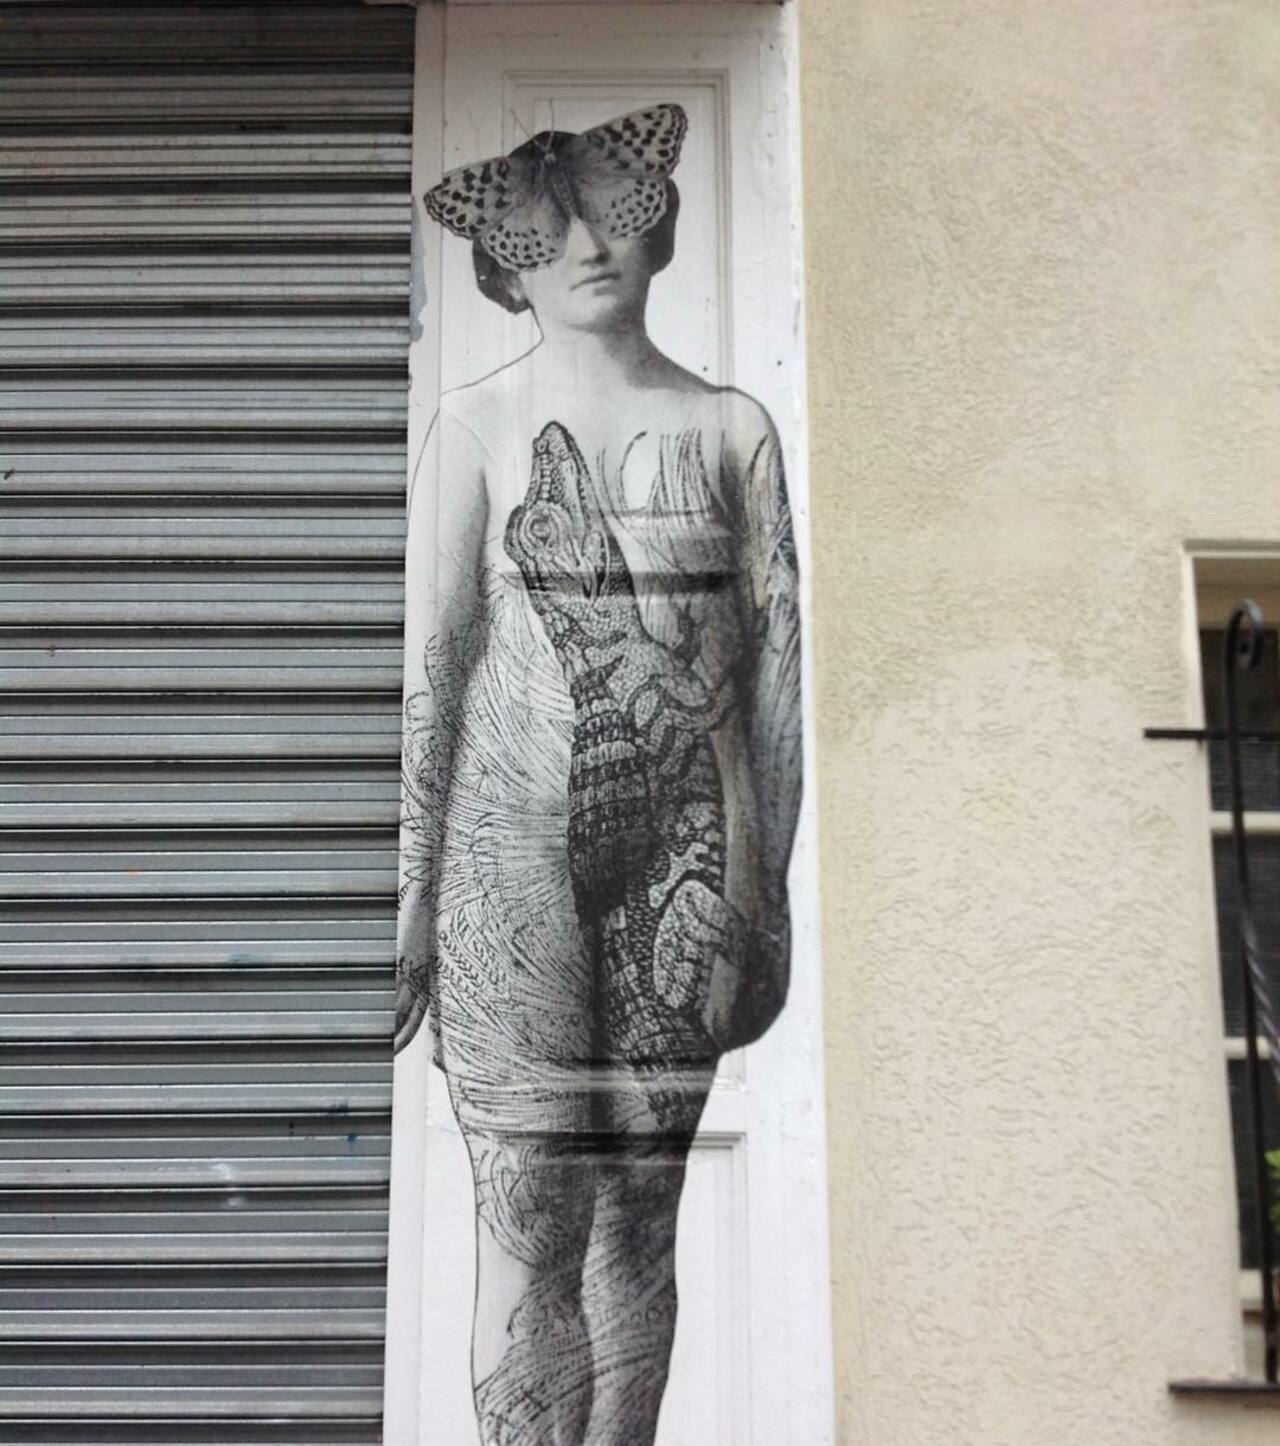 #Paris #graffiti photo by @stefetlinda http://ift.tt/1W56HuZ #StreetArt https://t.co/vOGxcY6RmV